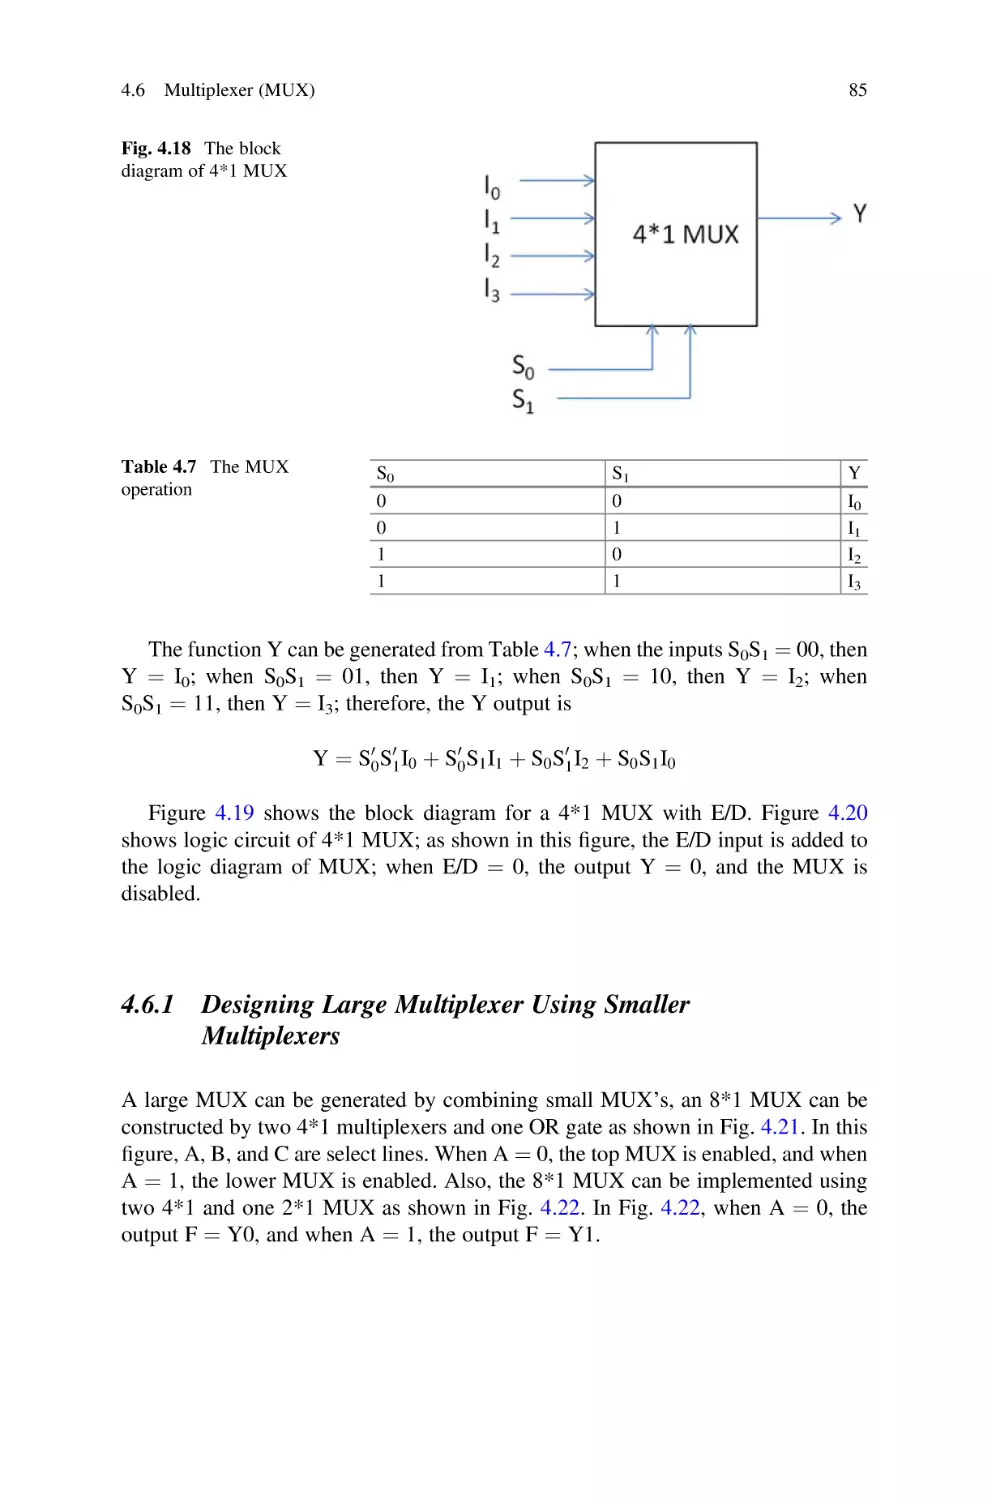 4.6.1 Designing Large Multiplexer Using Smaller Multiplexers